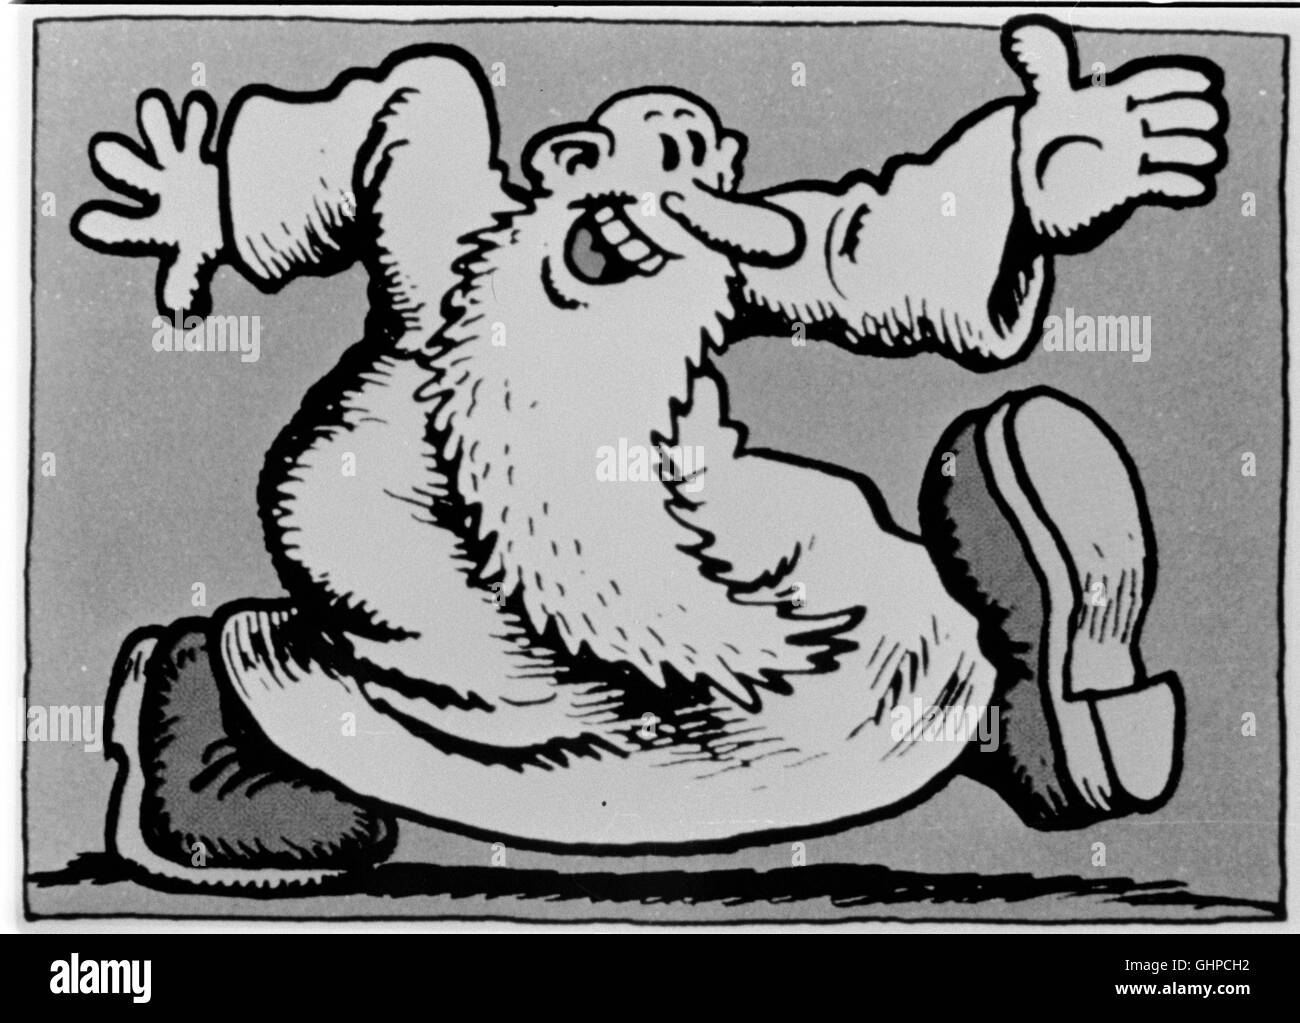 CRUMB - Dokumentarfilm über den Cartoonisten Robert Crumb Unser Bild: Cartoon von Robert Crumb Regie: Terry Zwigoff aka. Crumb Foto Stock